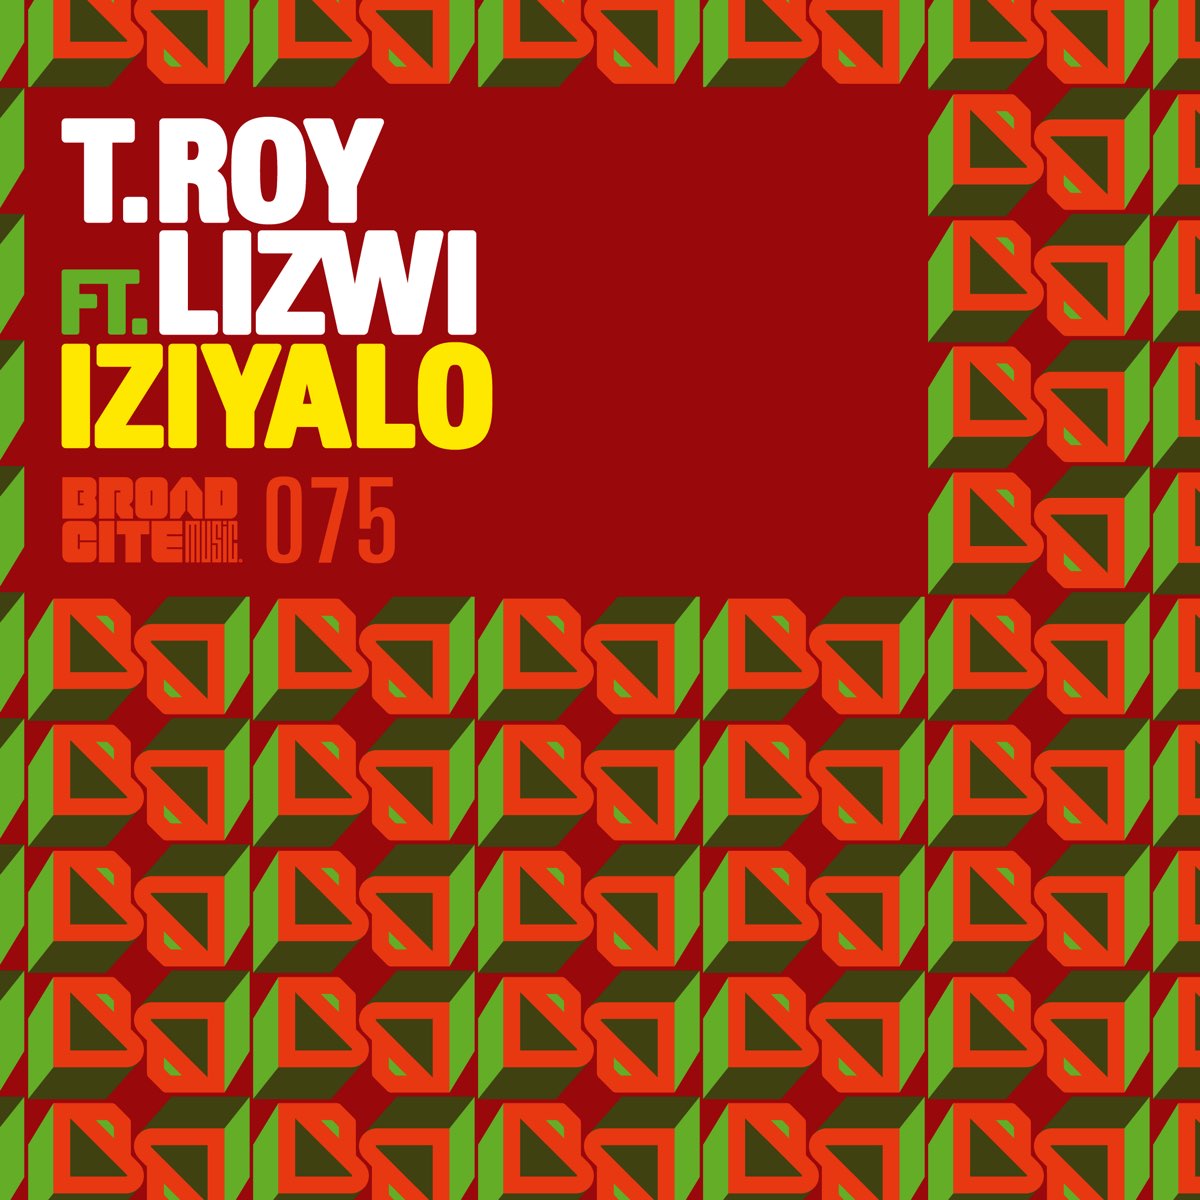 Amathole feat lizwi перевод песни. T'Roy. Lizwi. S'T'Roy Mix. Waves & WAVS (feat. Lizwi) от Ahmed Spins.